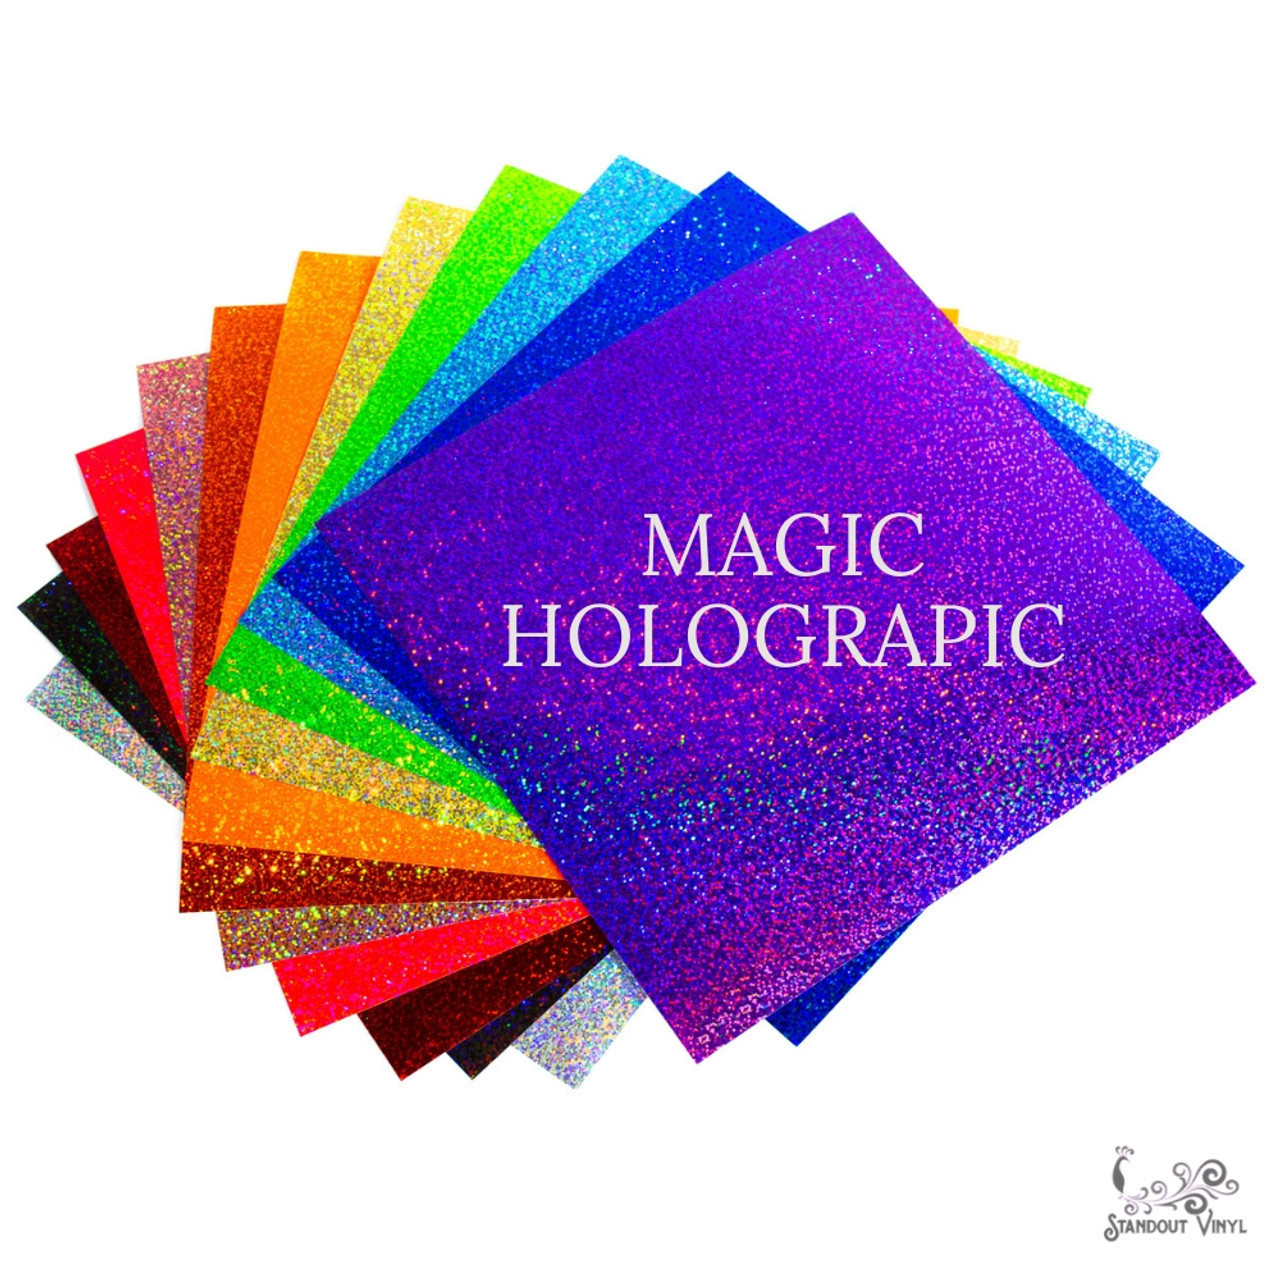 Magic Holographic Adhesive Craft Vinyl Sheets